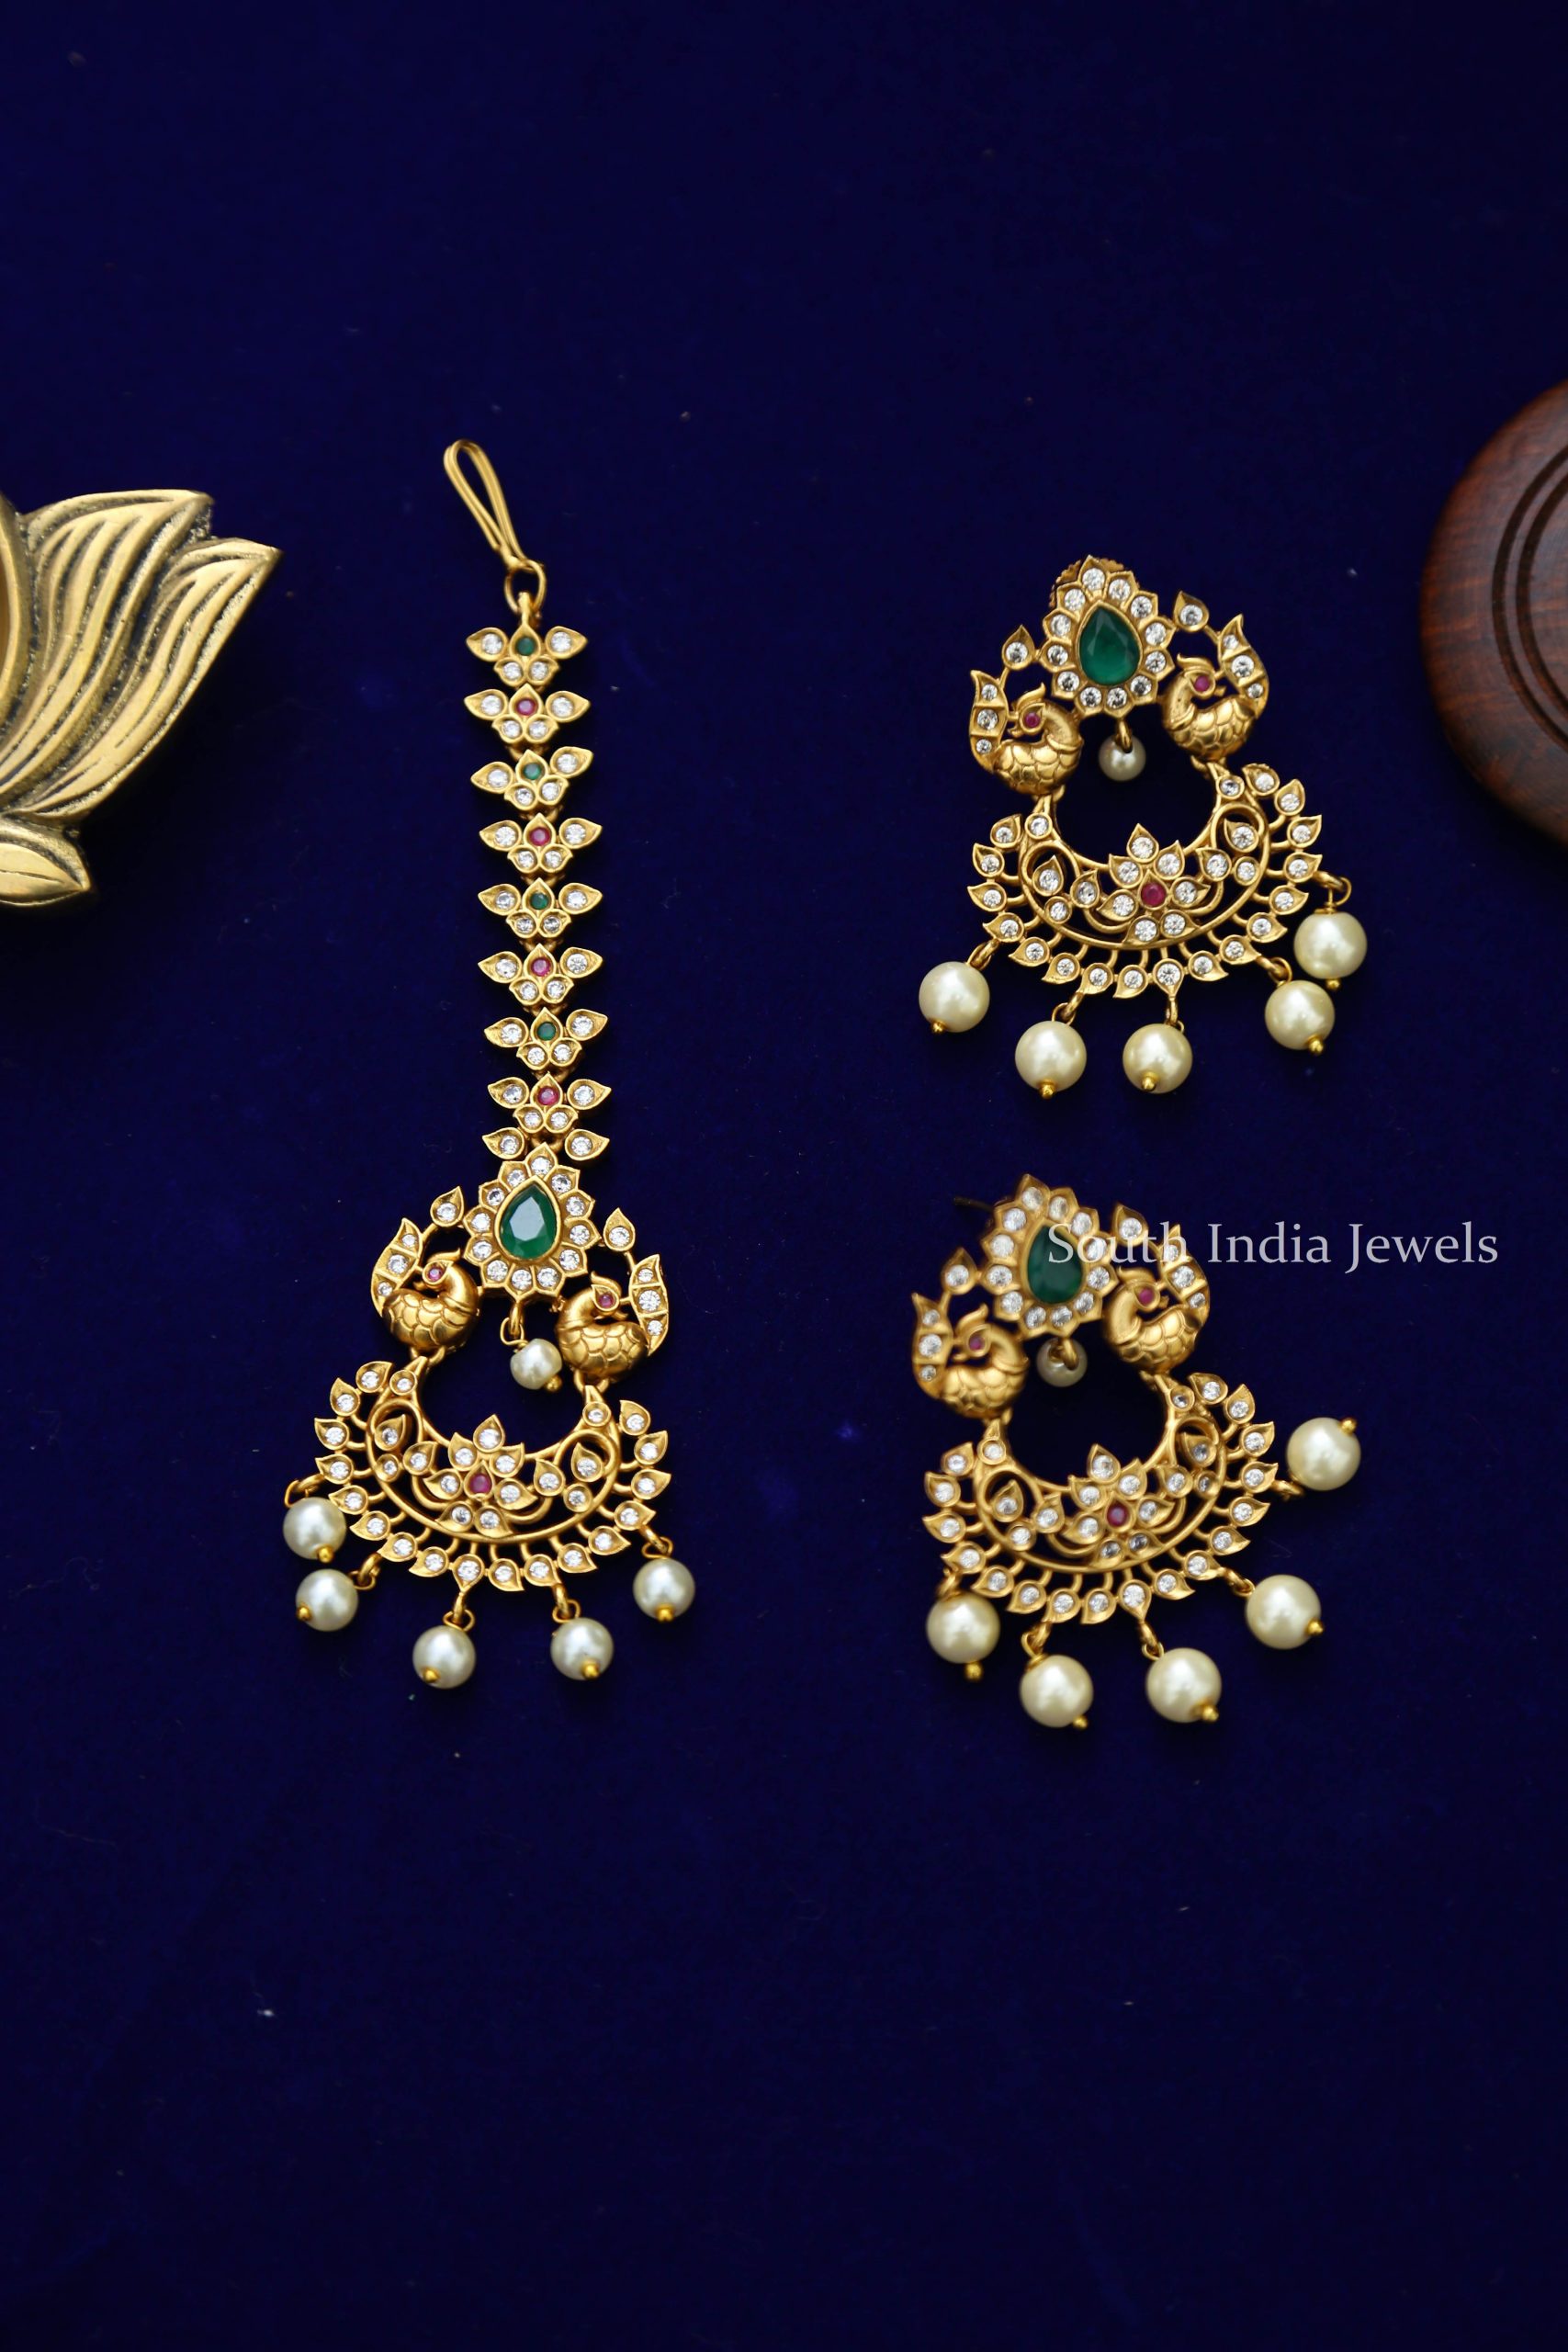 Trendy Maang Tikka and Earrings - South India Jewels